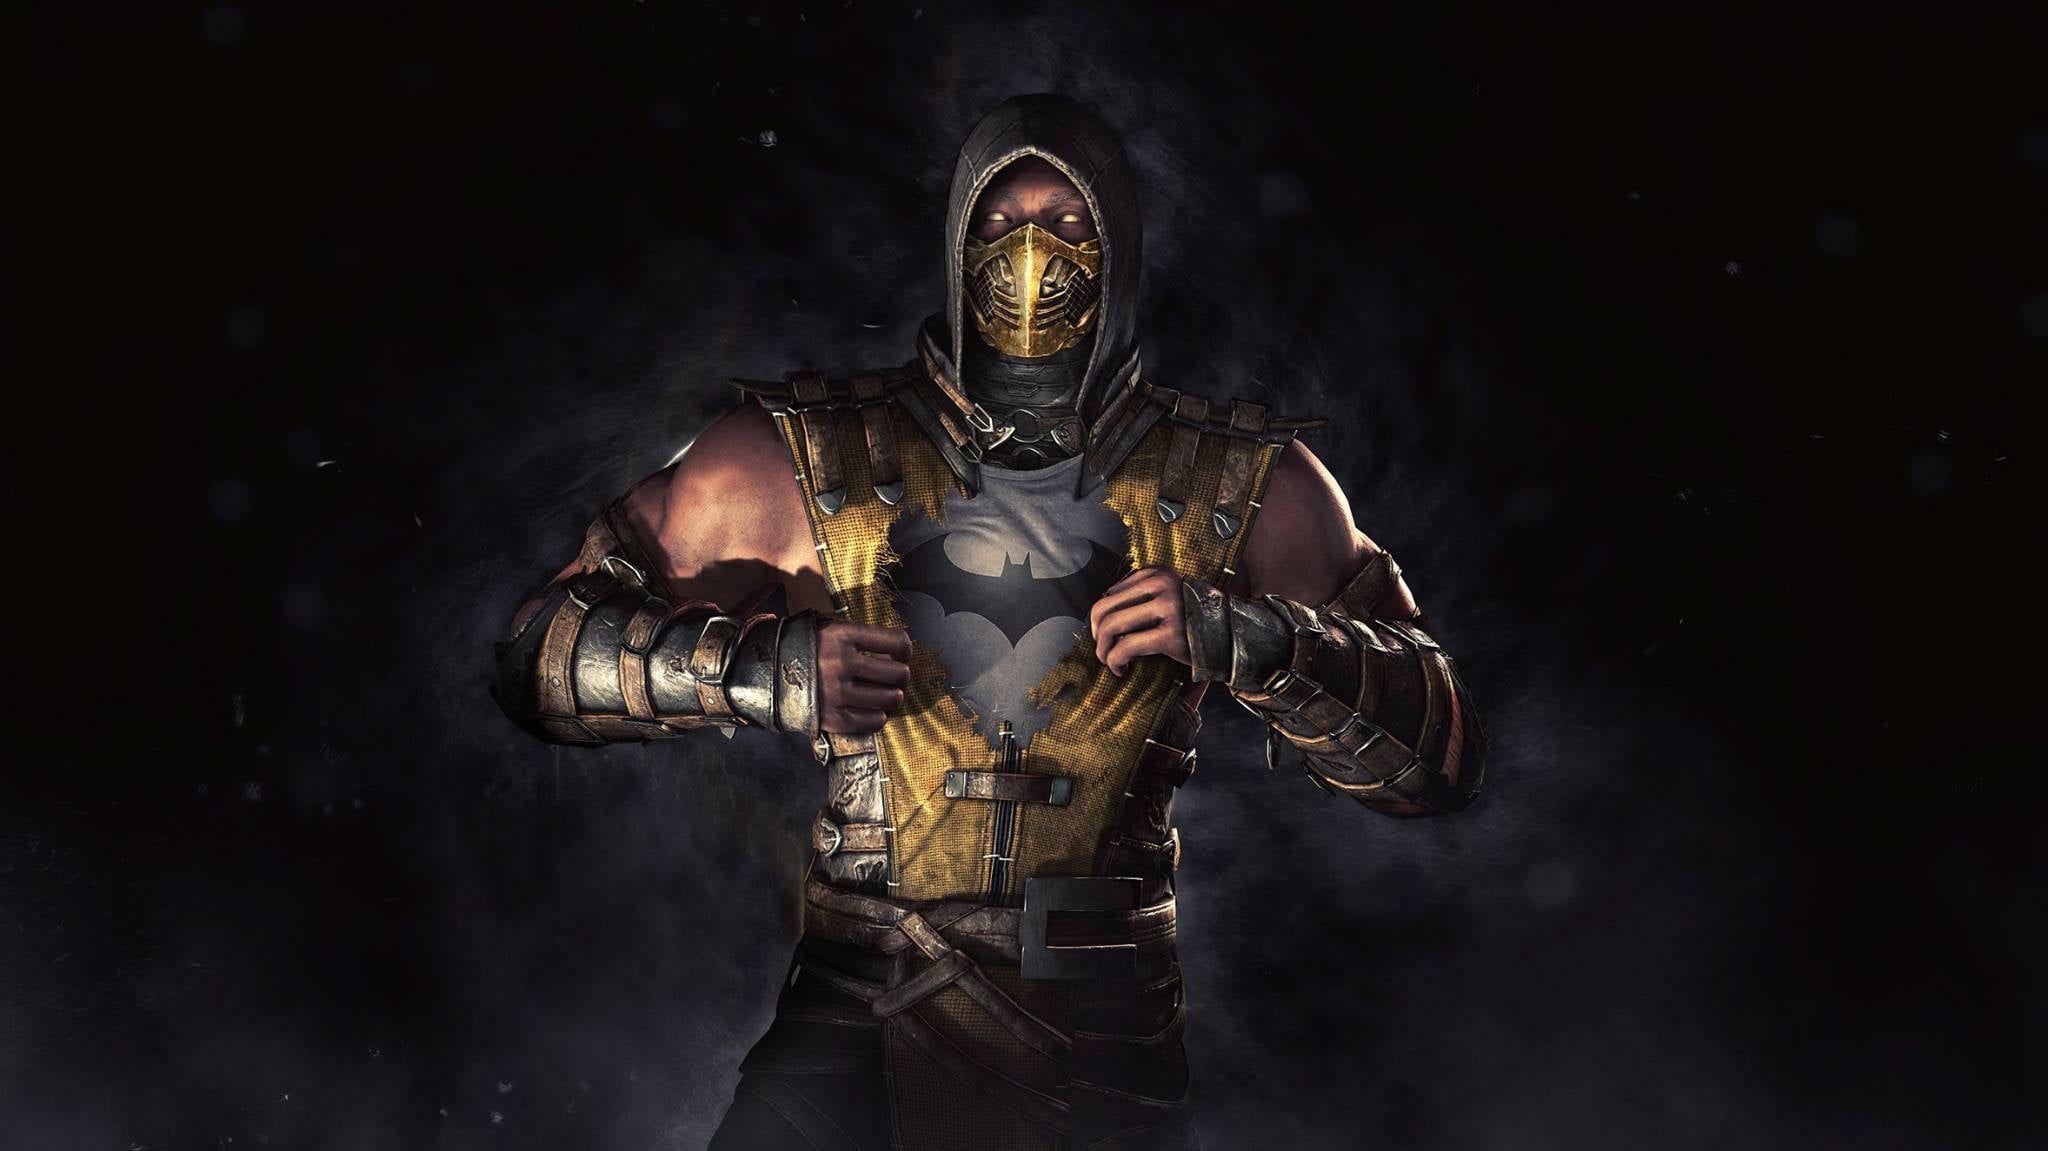 Mortal Kombat X Scorpion digital poster .wallpaperflare.com